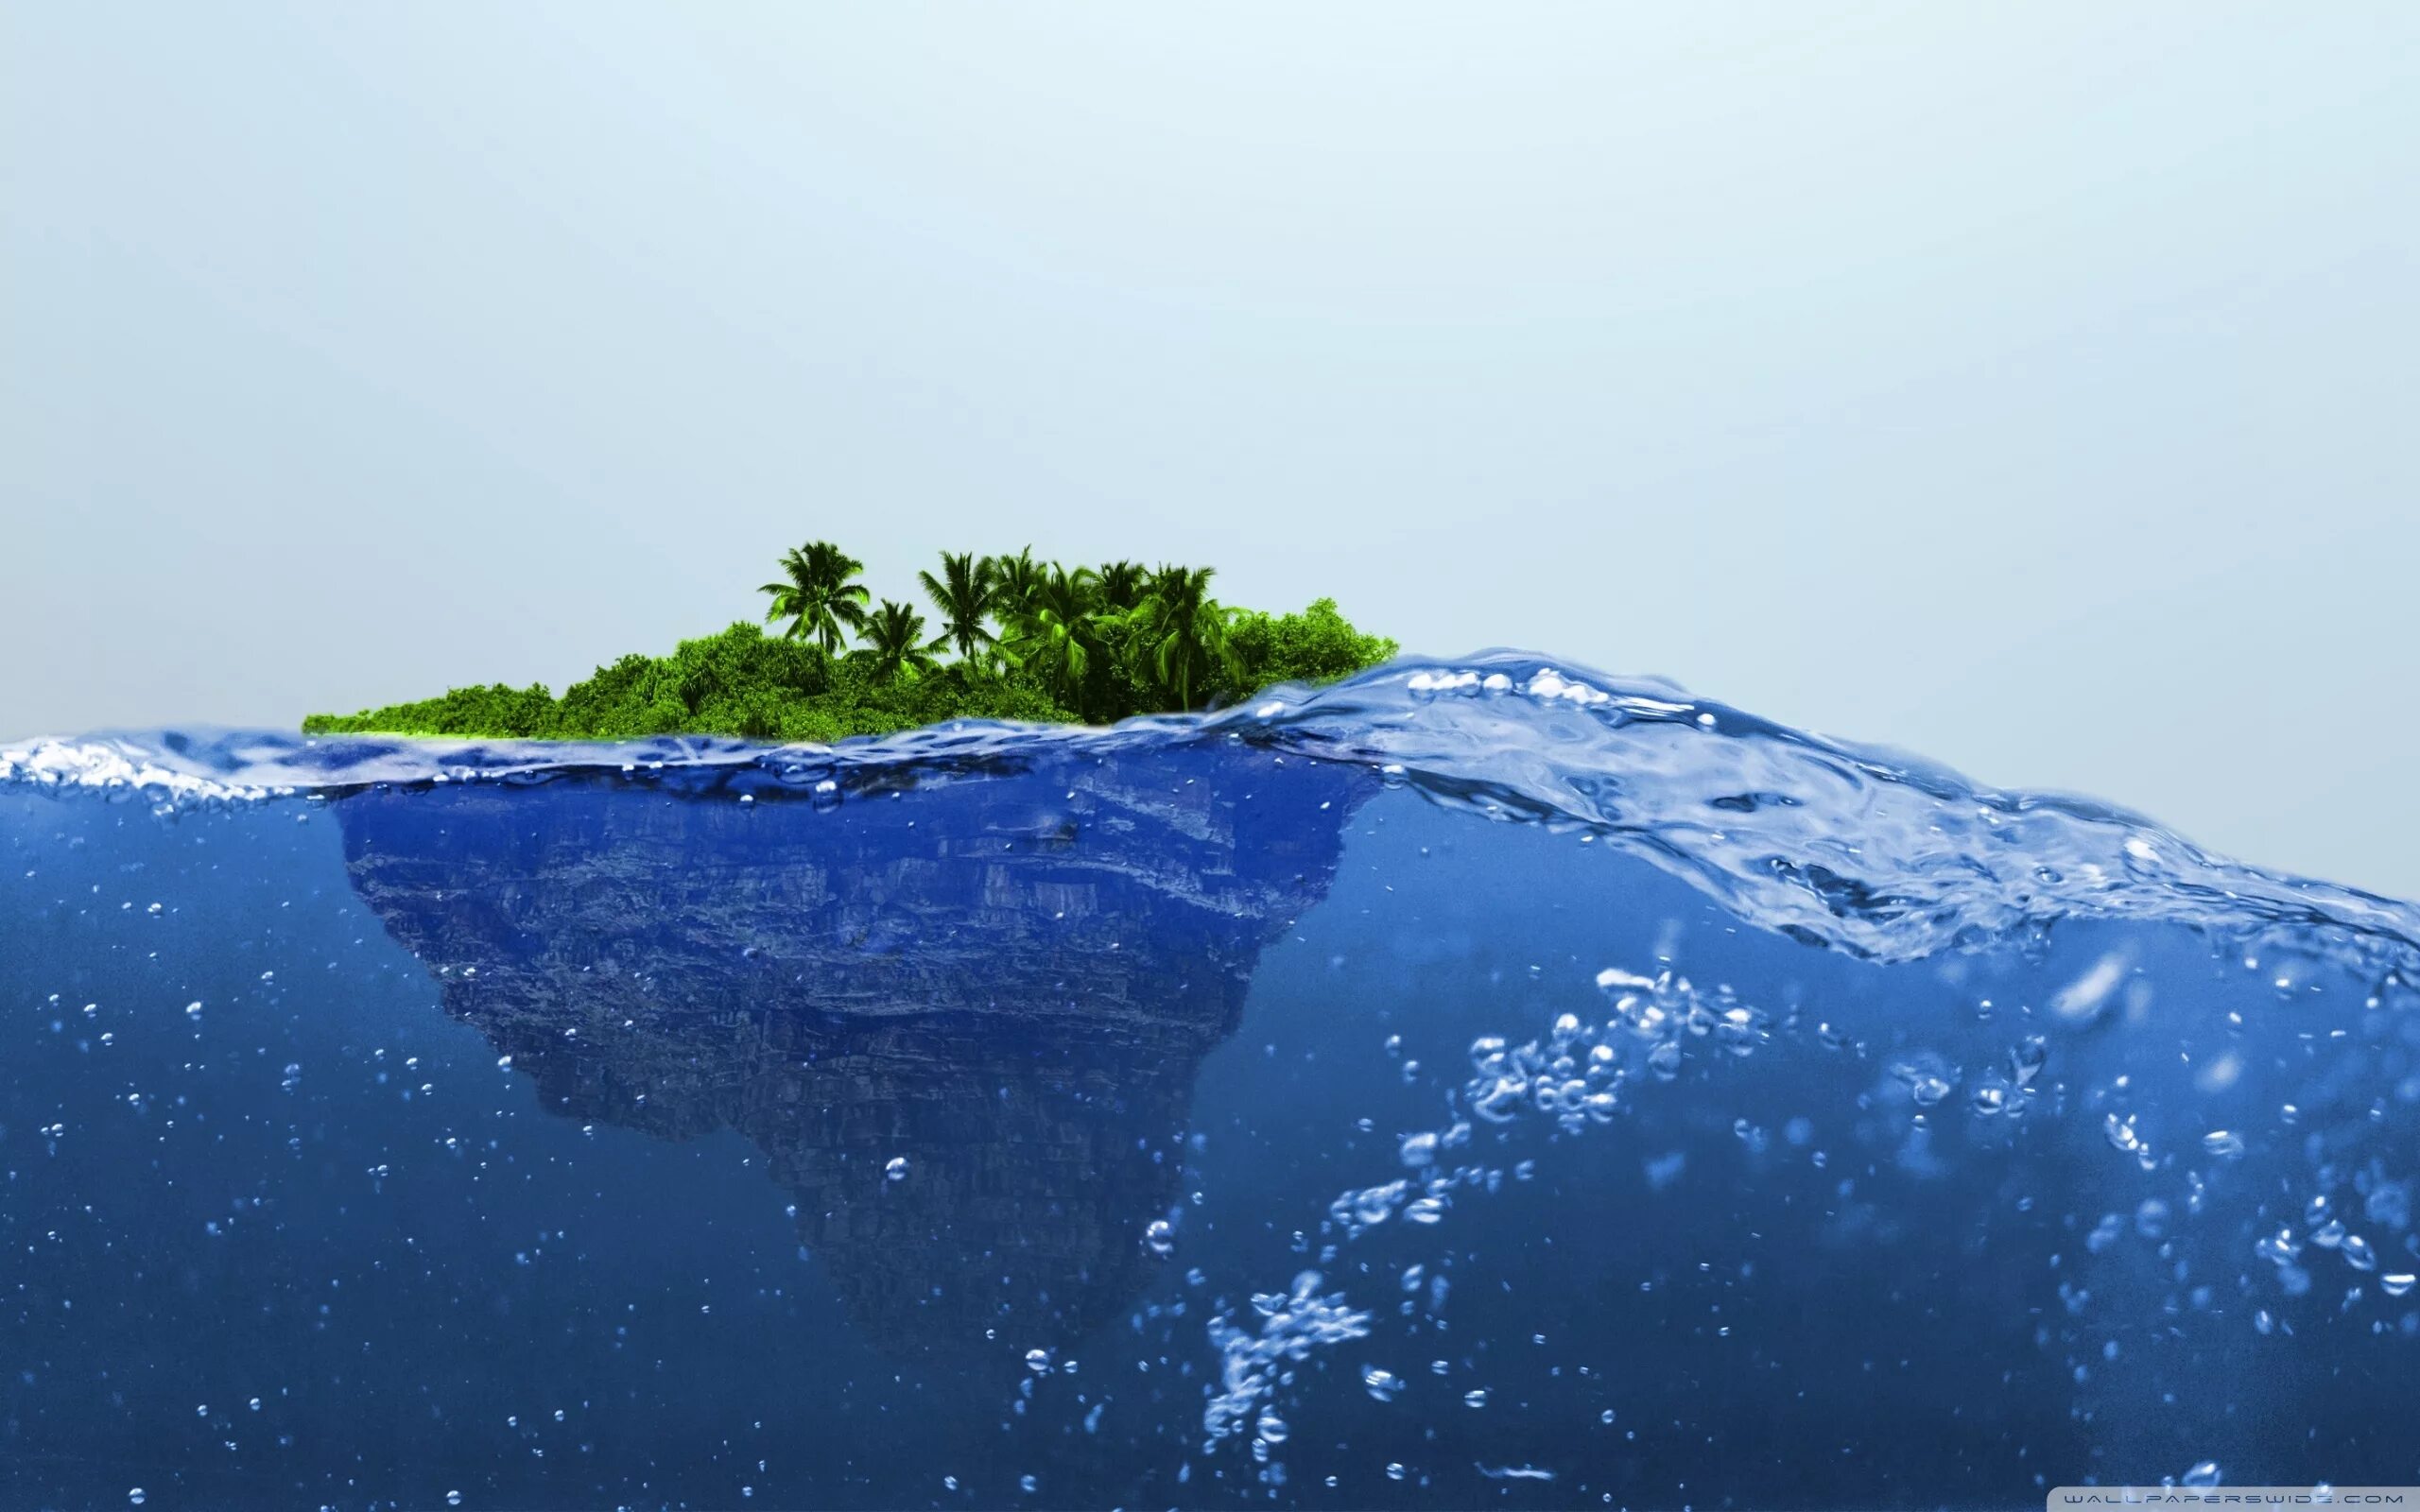 Участок суши в океане. Остров в океане. Плавающие острова в океане. Вода на земле. Вода и суша.